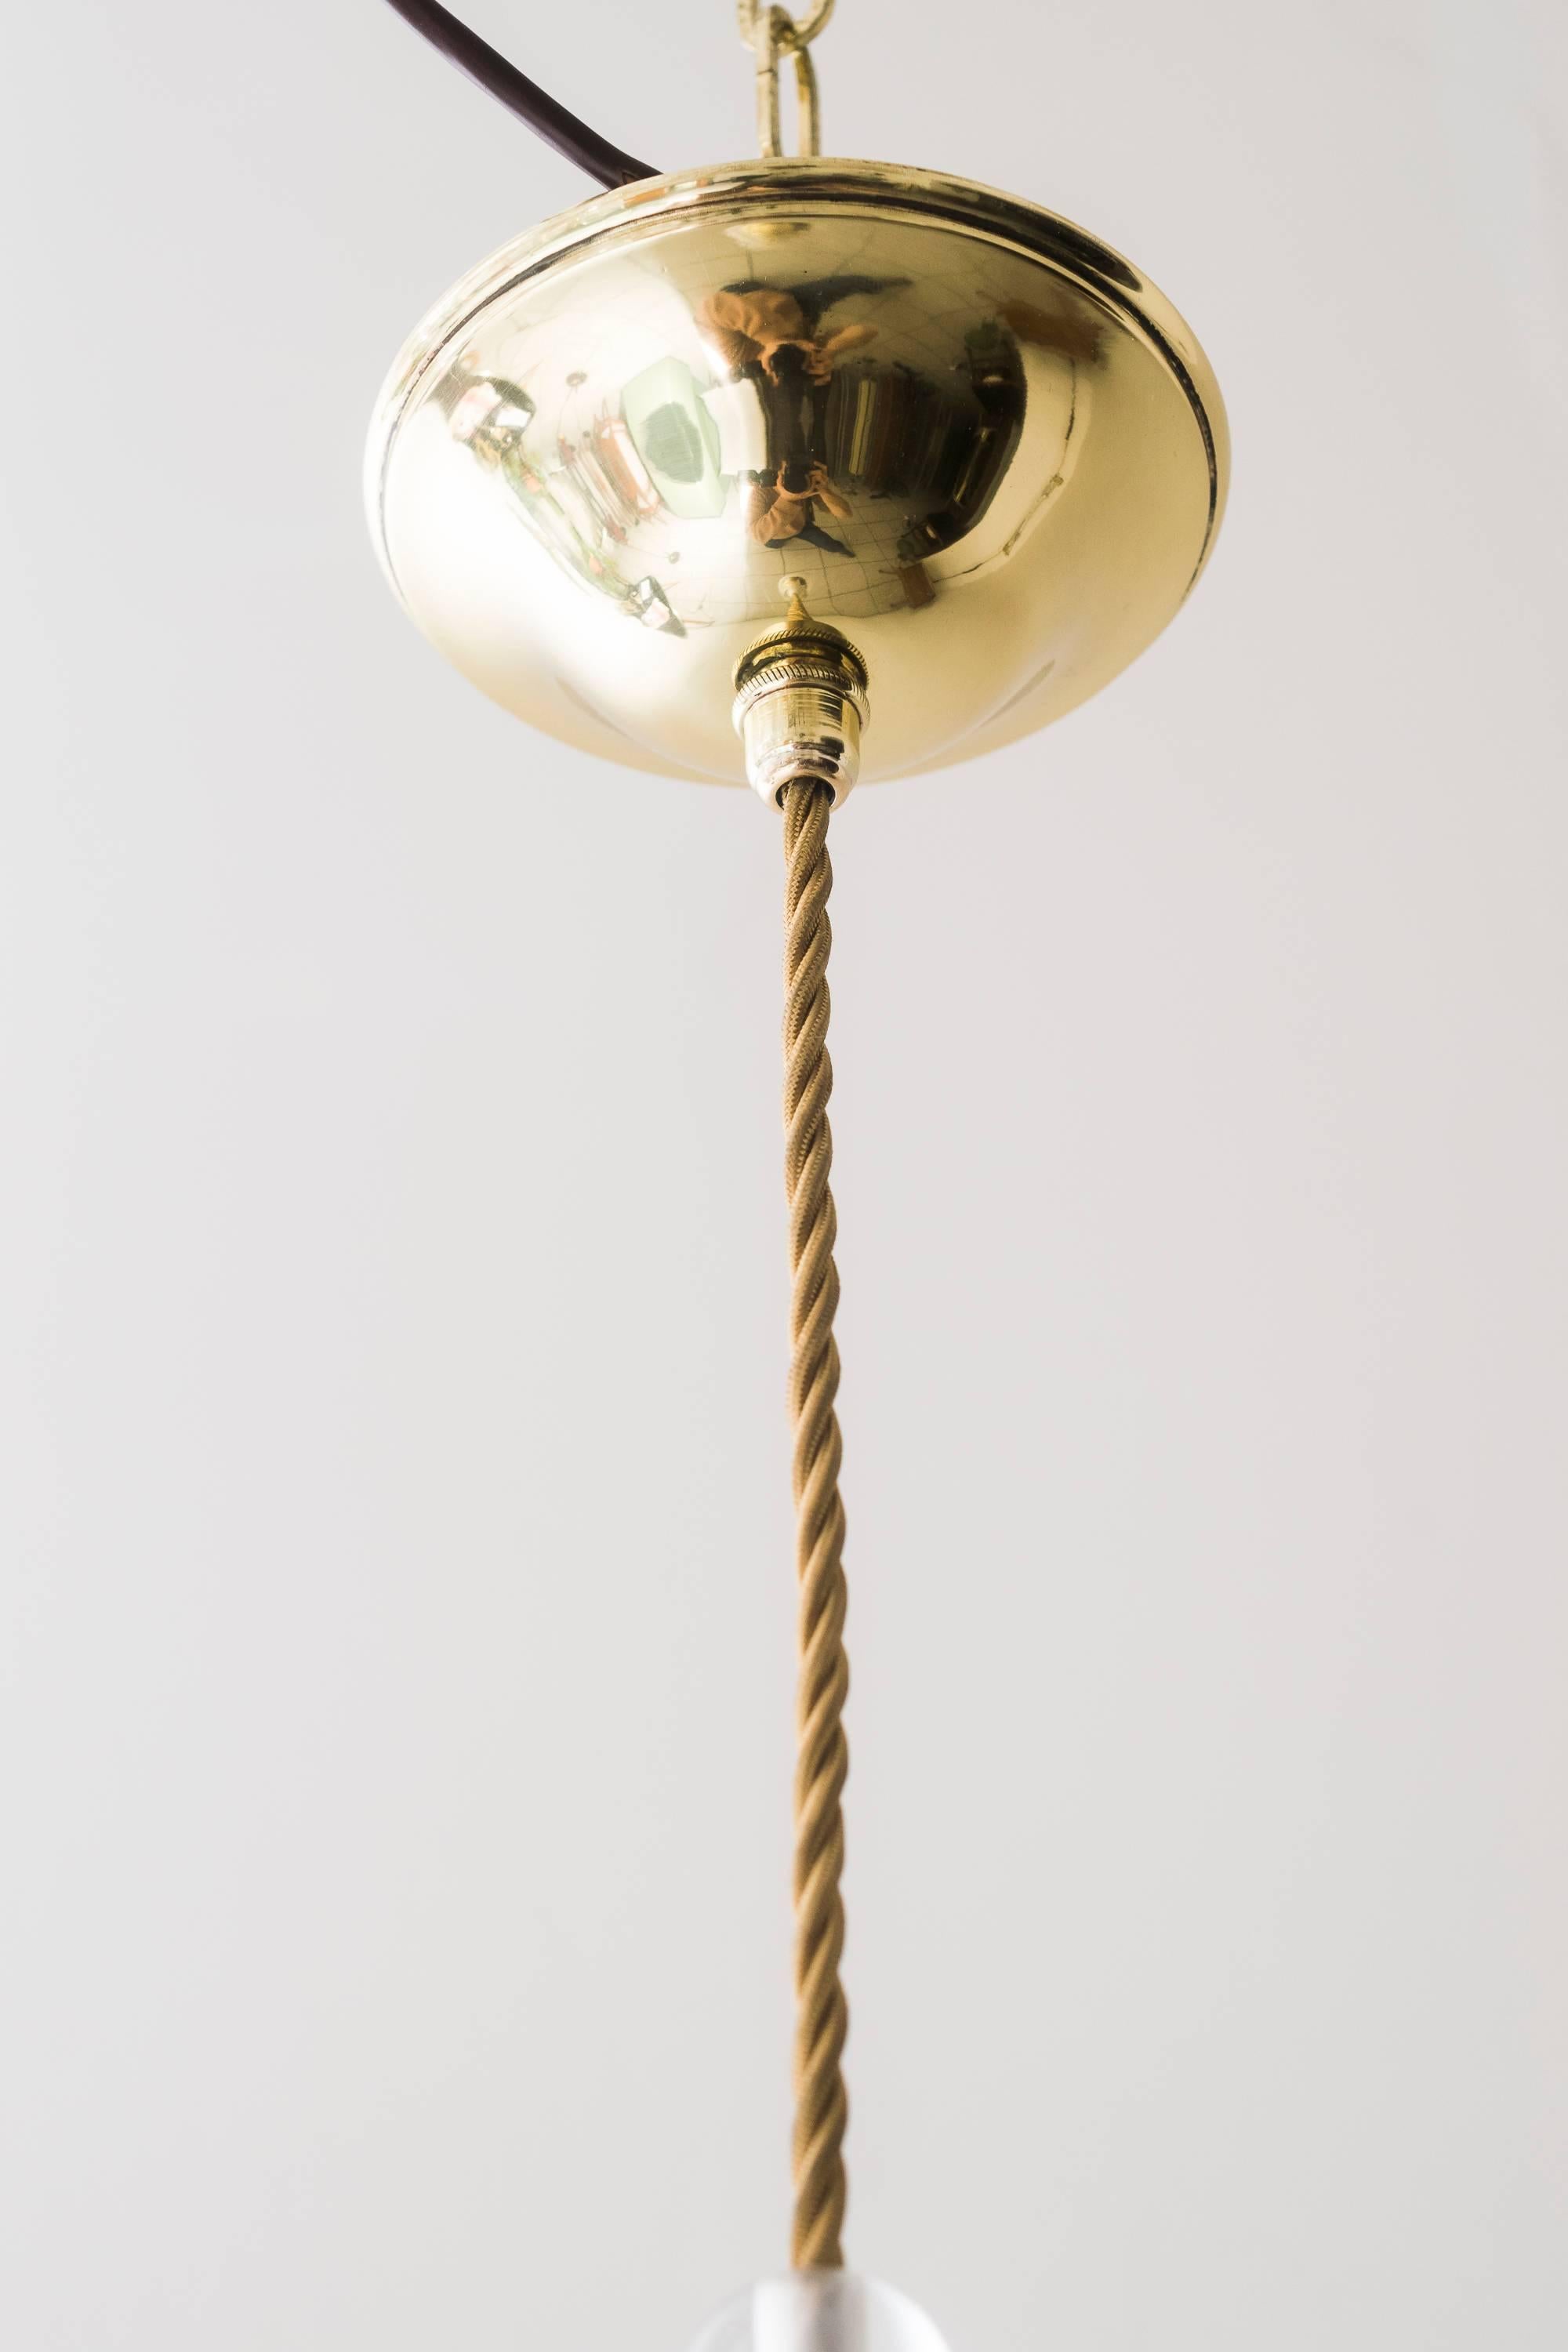 Austrian Viennese Hanging Lamp circa 1905 with Loetz Lamp Shade Koloman Moser